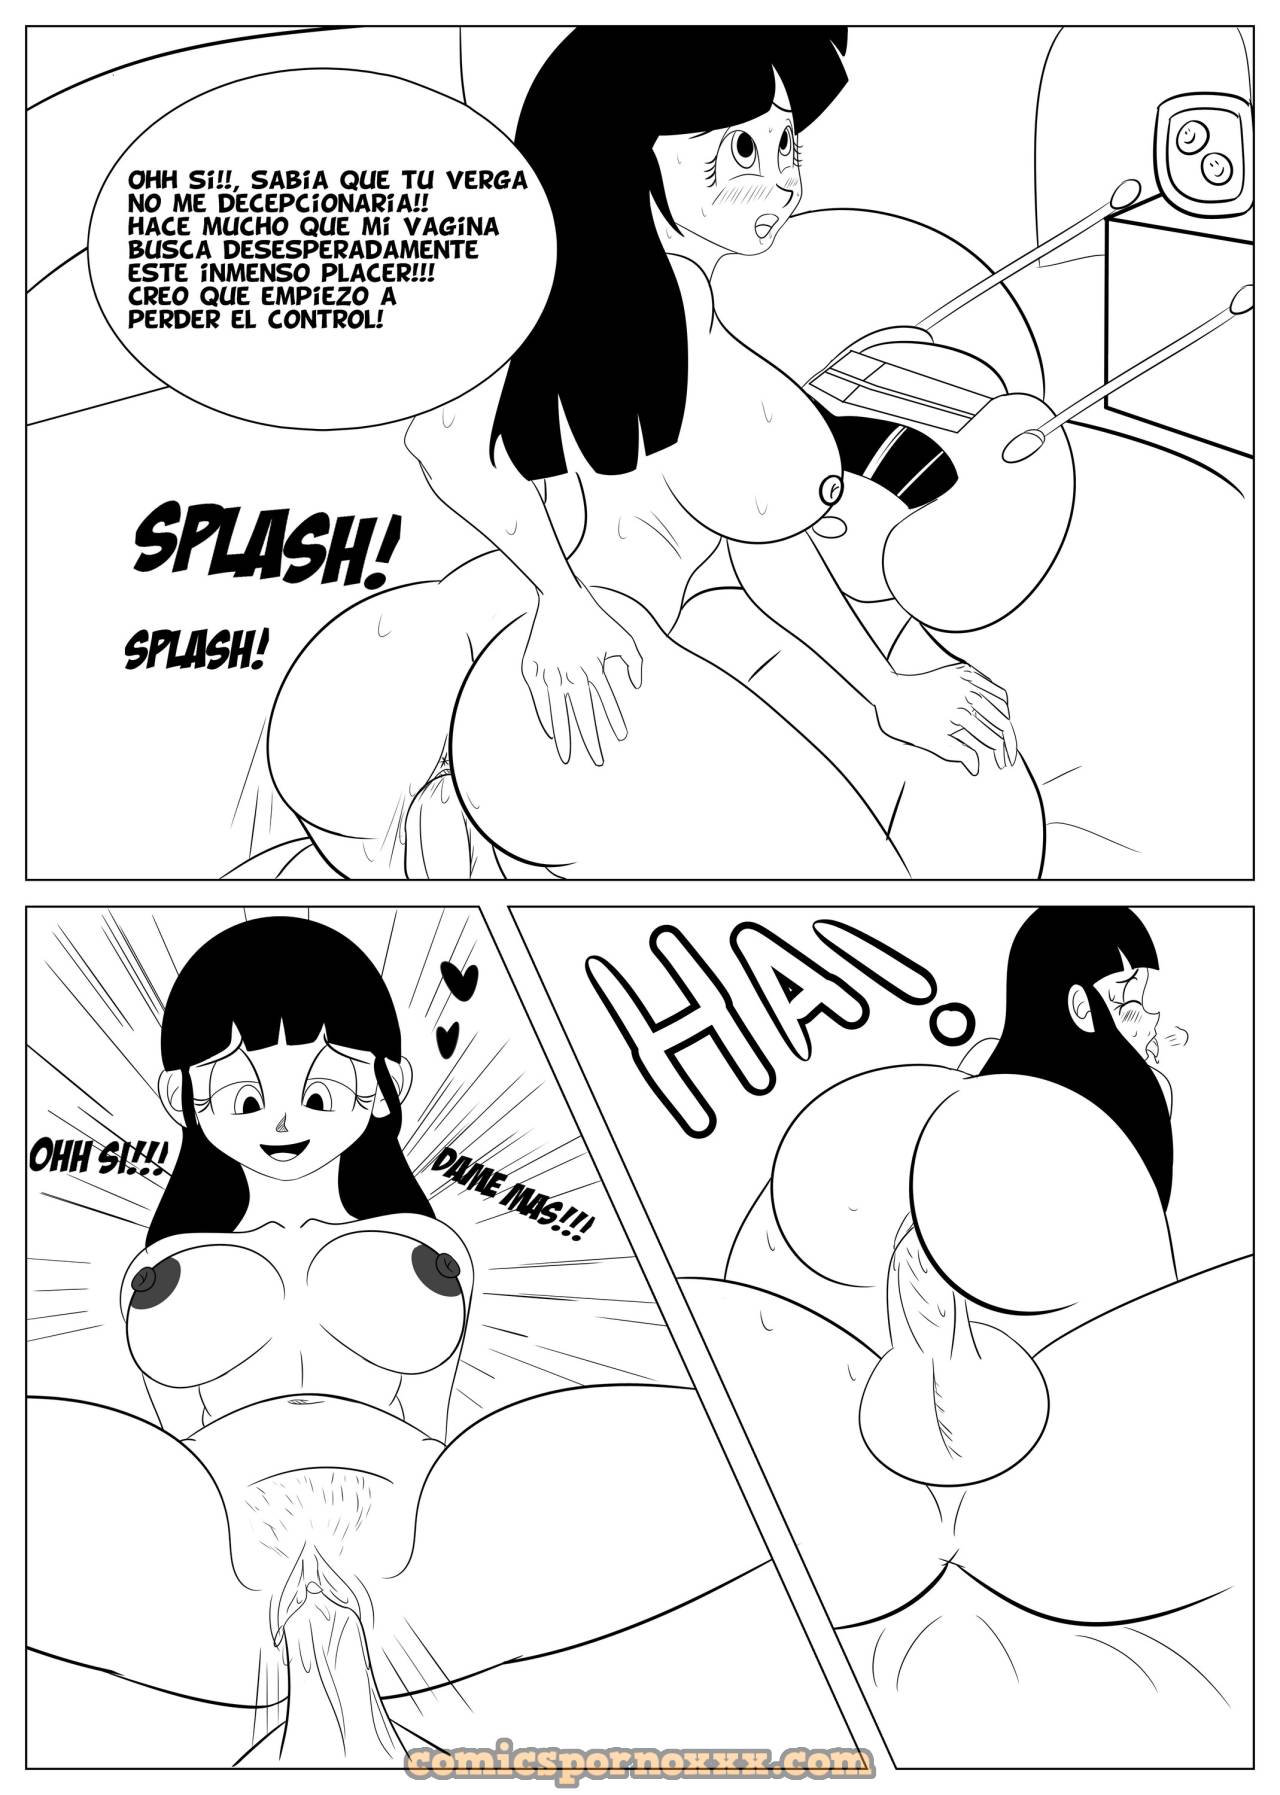 Malentendidos Familiares - 11 - Comics Porno - Hentai Manga - Cartoon XXX